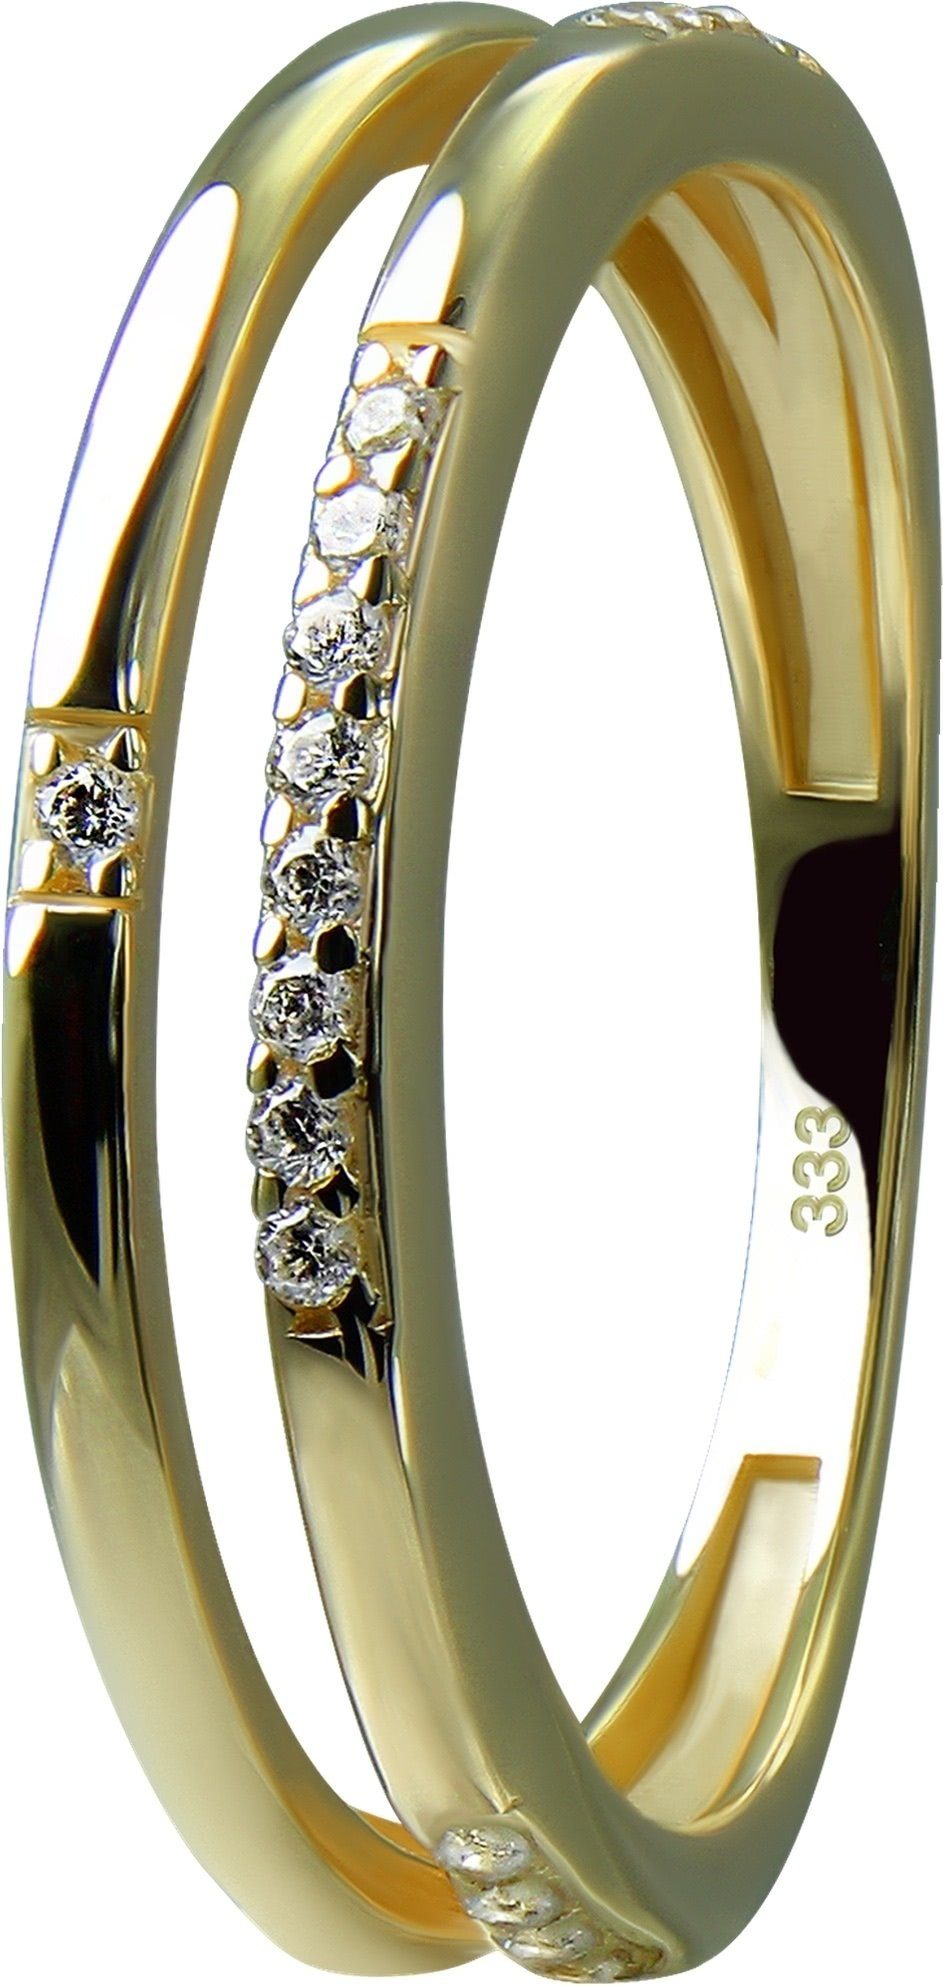 GoldDream Goldring GoldDream Gold Ring Double Gr.58 (Fingerring), Damen Ring Double 333 Gelbgold - 8 Karat, Farbe: gold, weiß